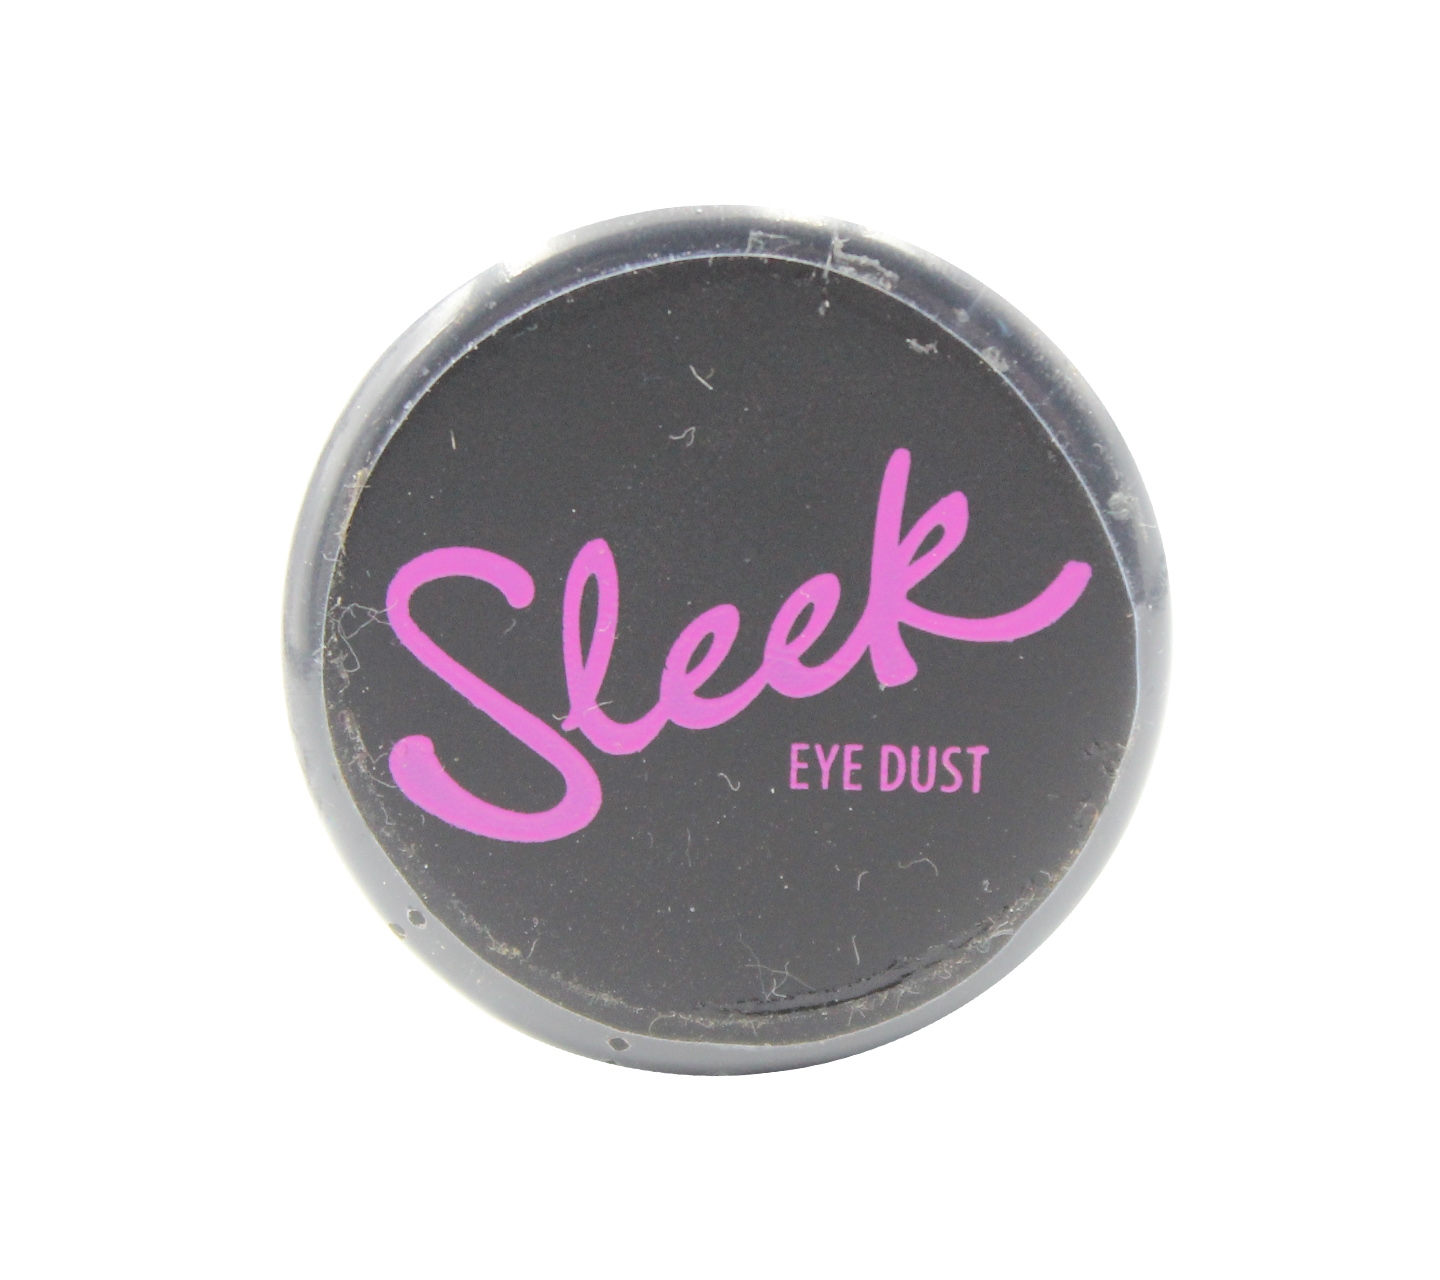 Sleek 679 Vintage Eye Dust Eyes